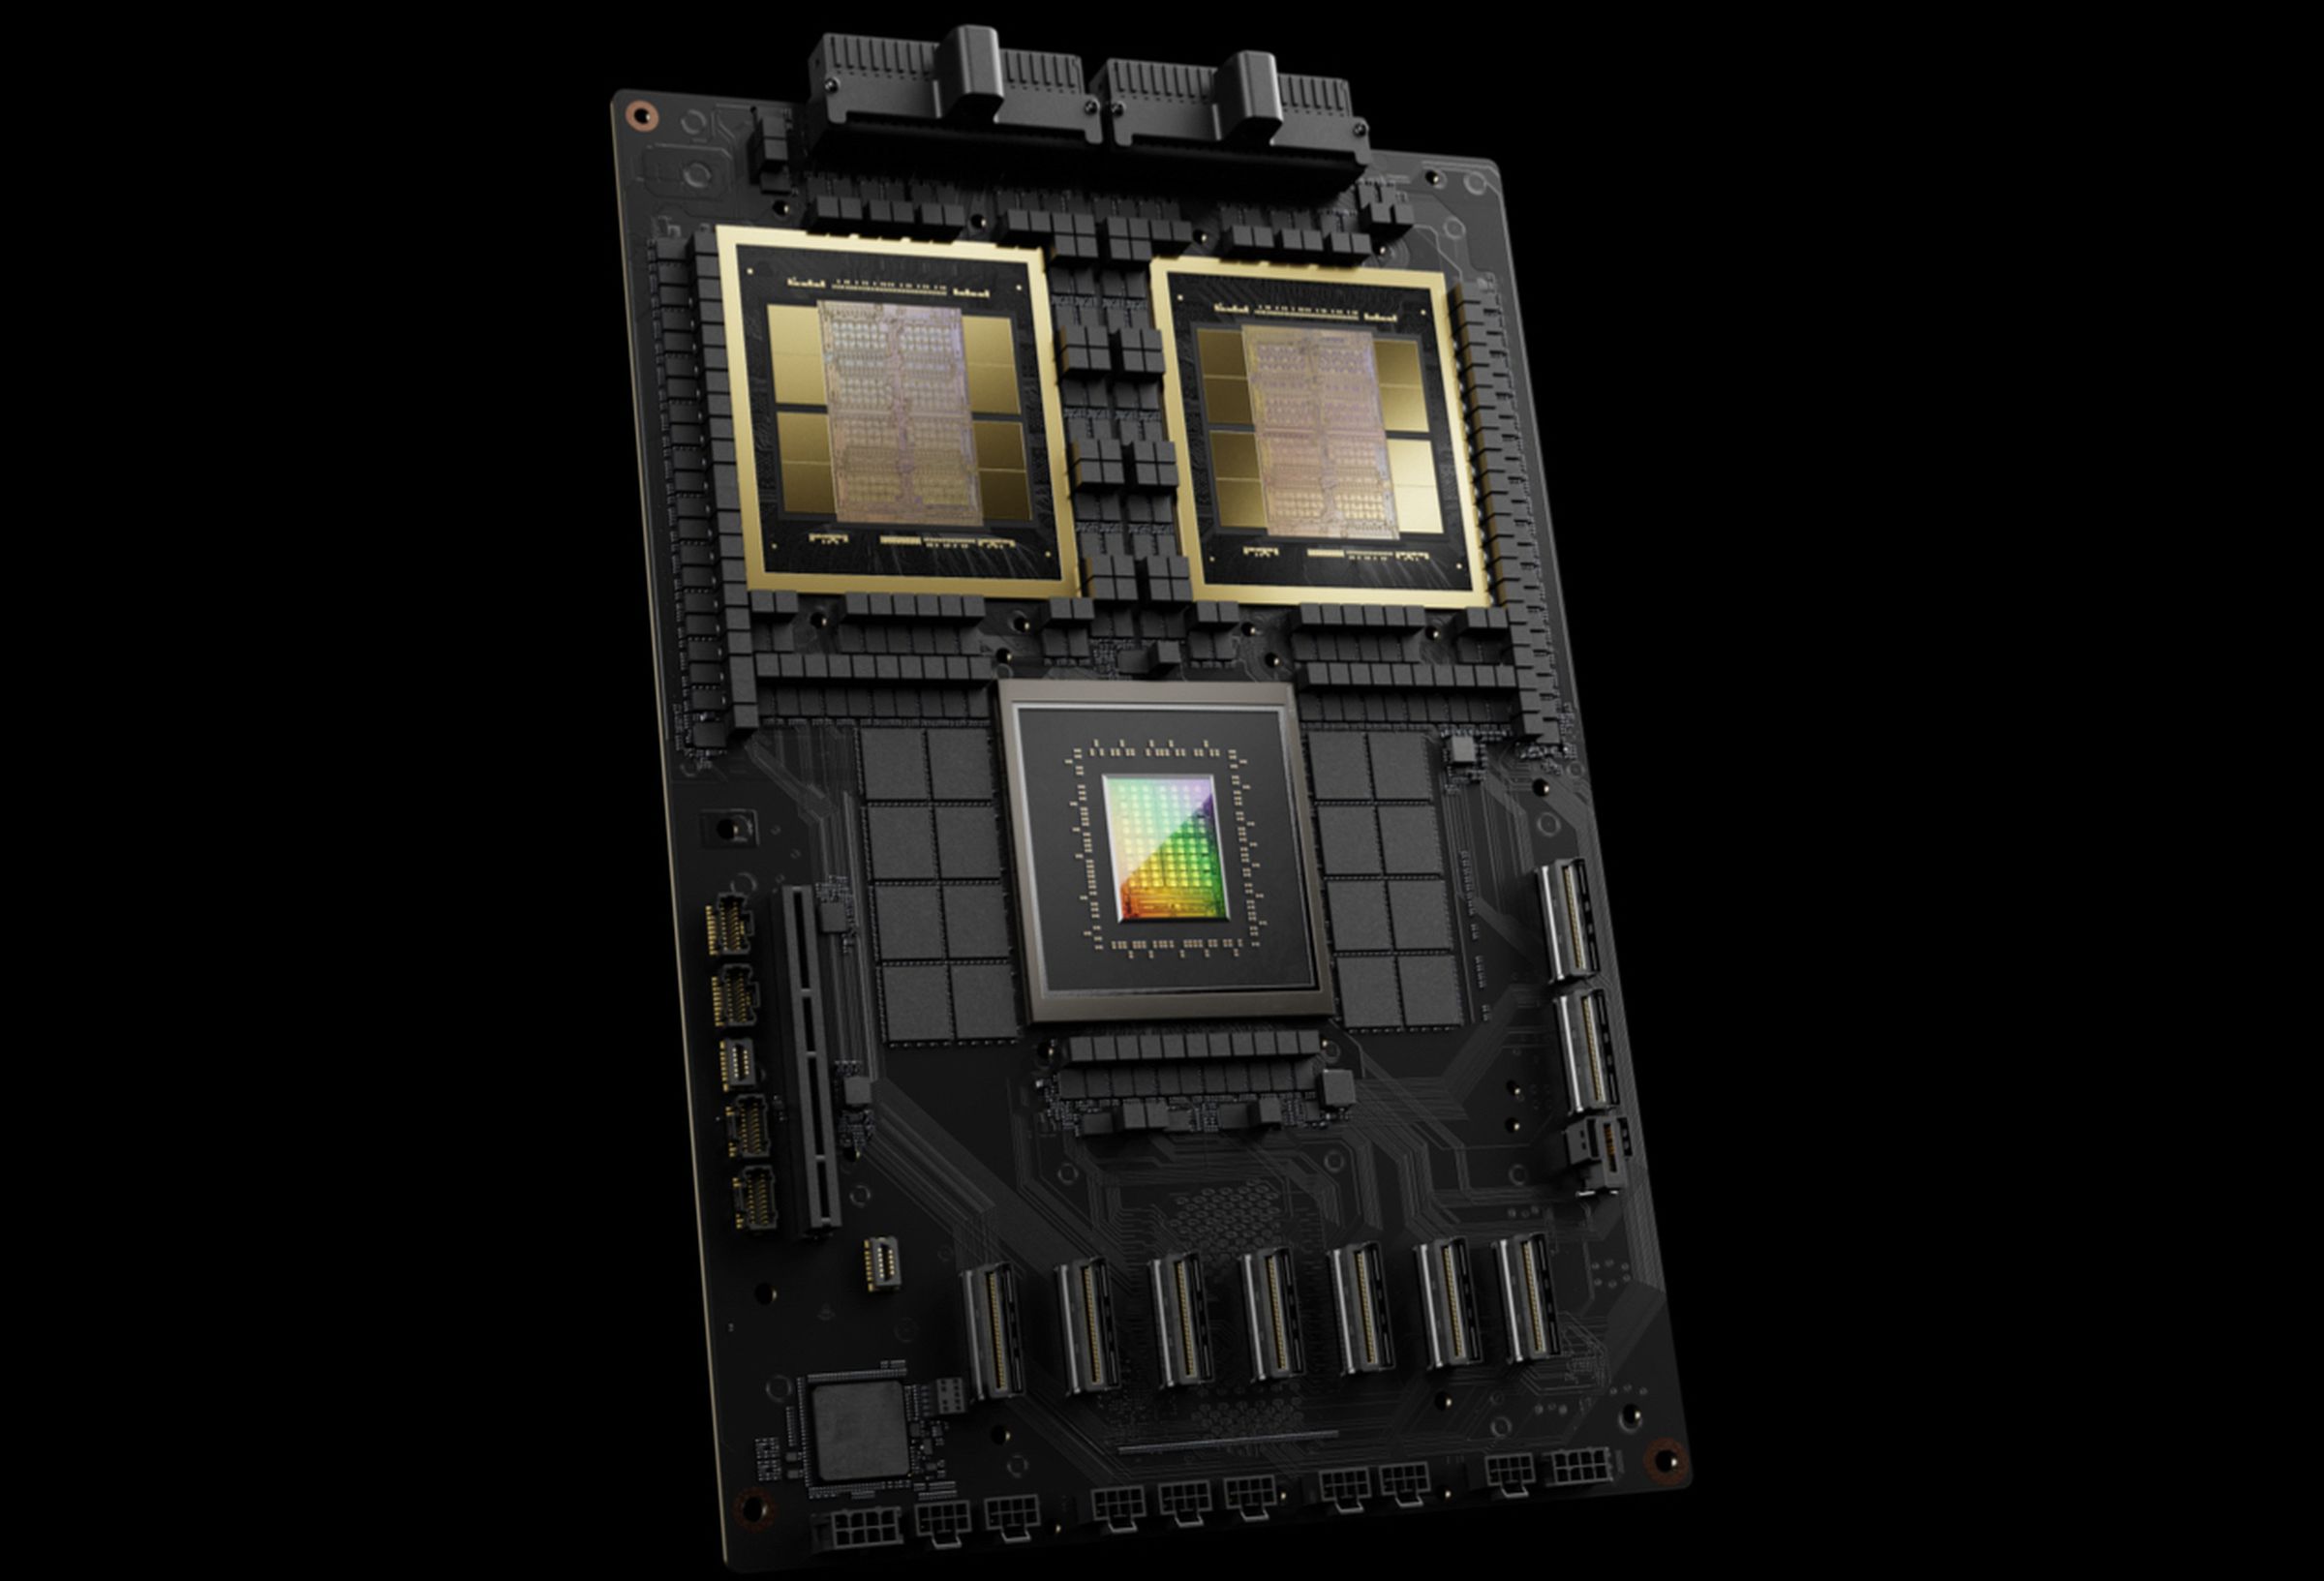 Here’s what one GB200 looks like. Two GPUs, one CPU, one board.